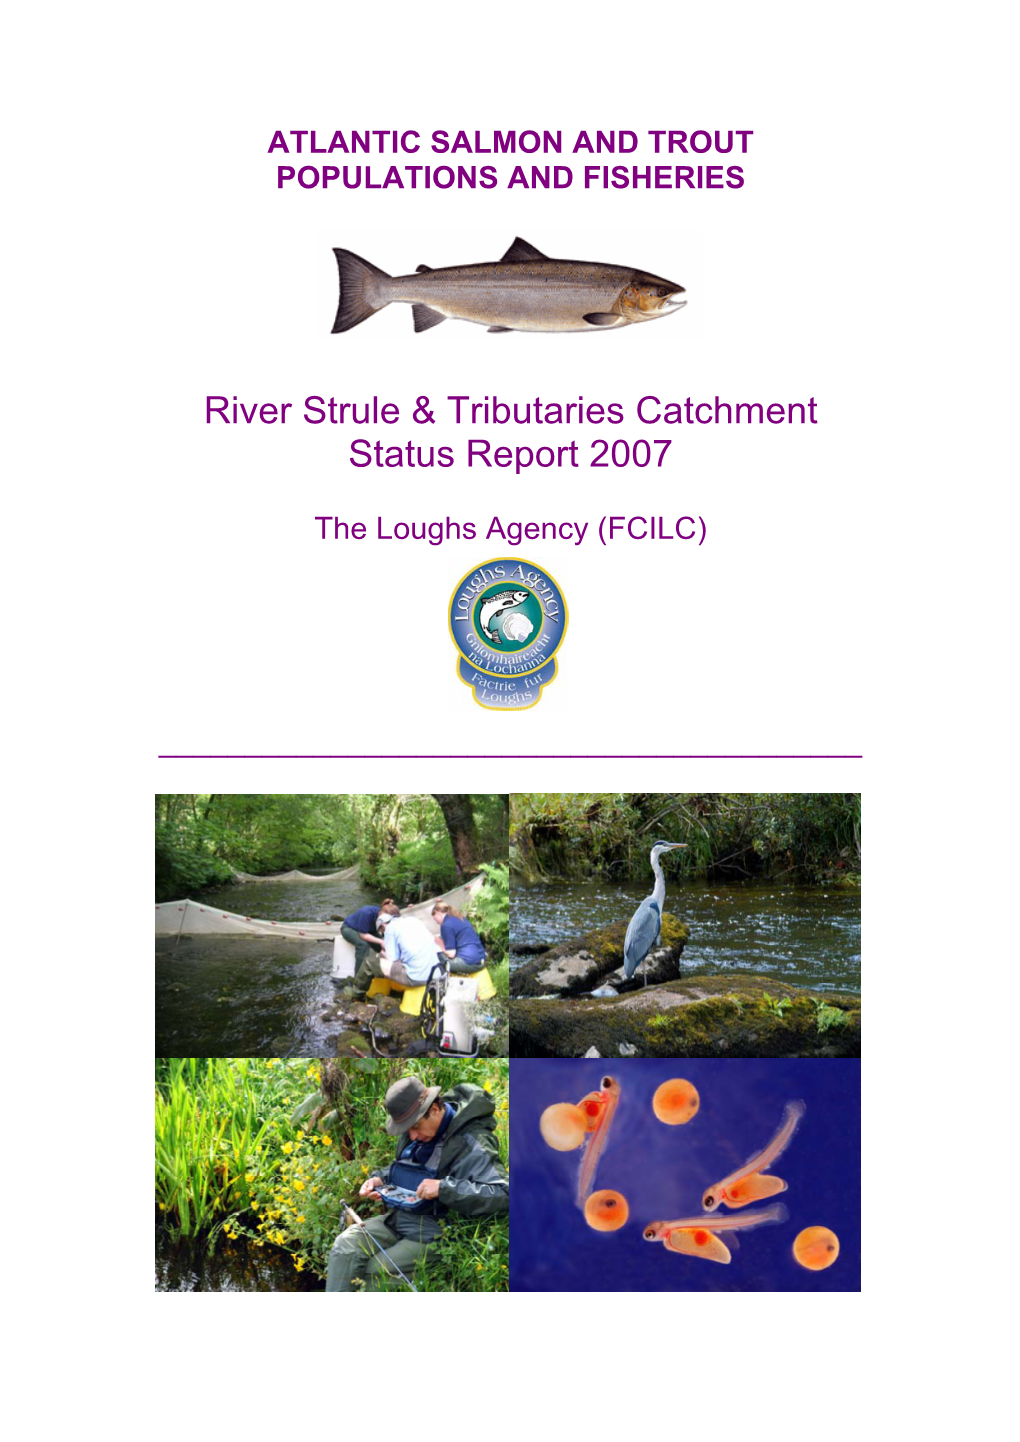 River Strule & Tributaries Catchment Status Report 2007